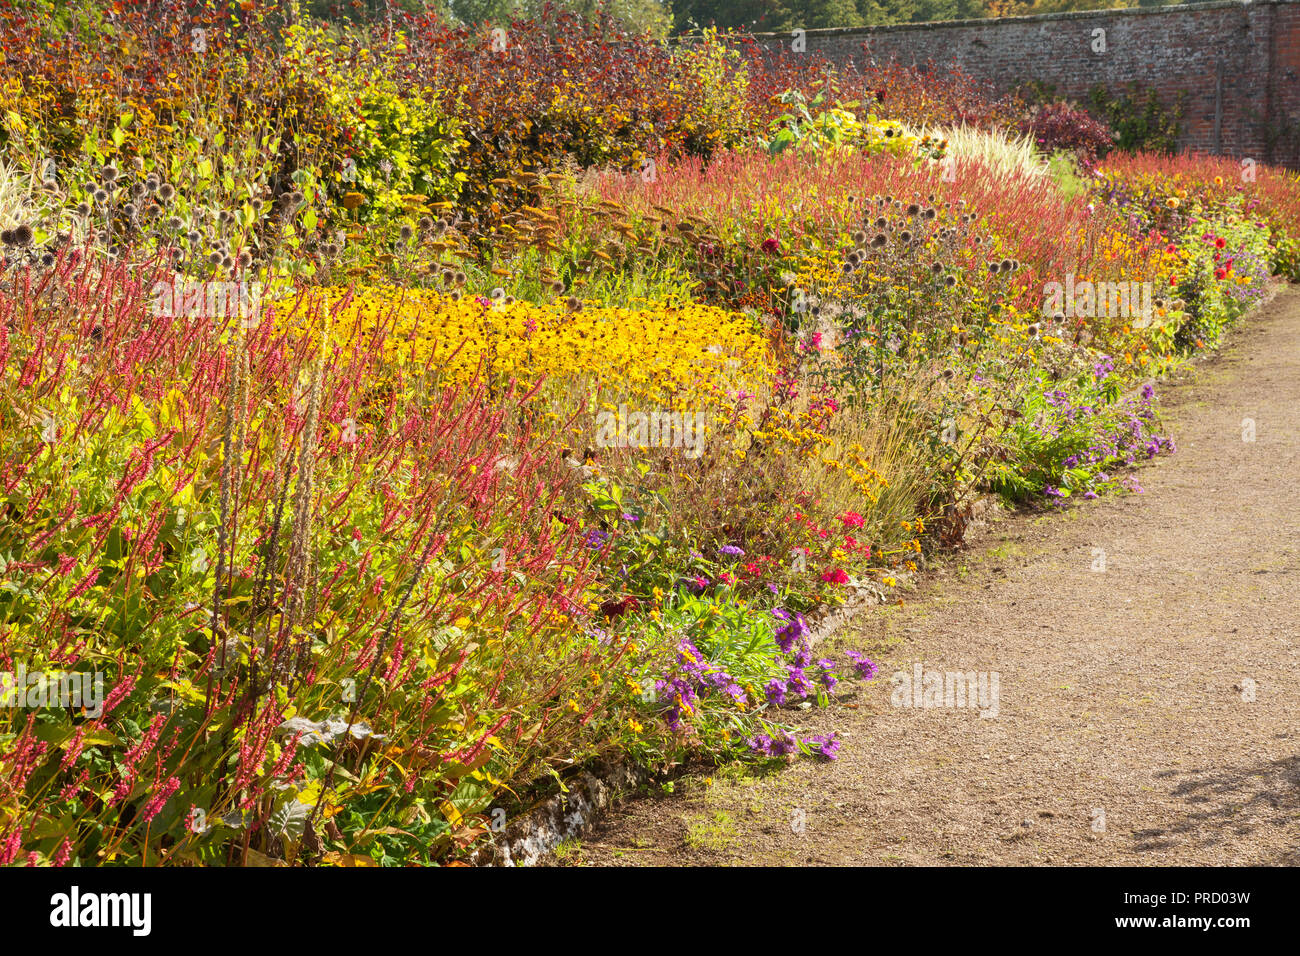 Helmsley Walled Garden, Helmsley, North Yorkshire, UK. Autumn, September 2018. Stock Photo